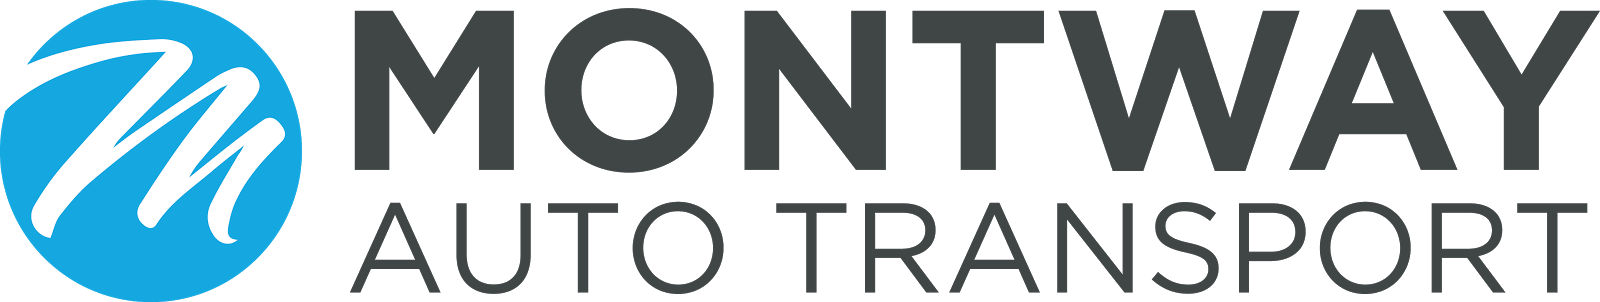 montway logo